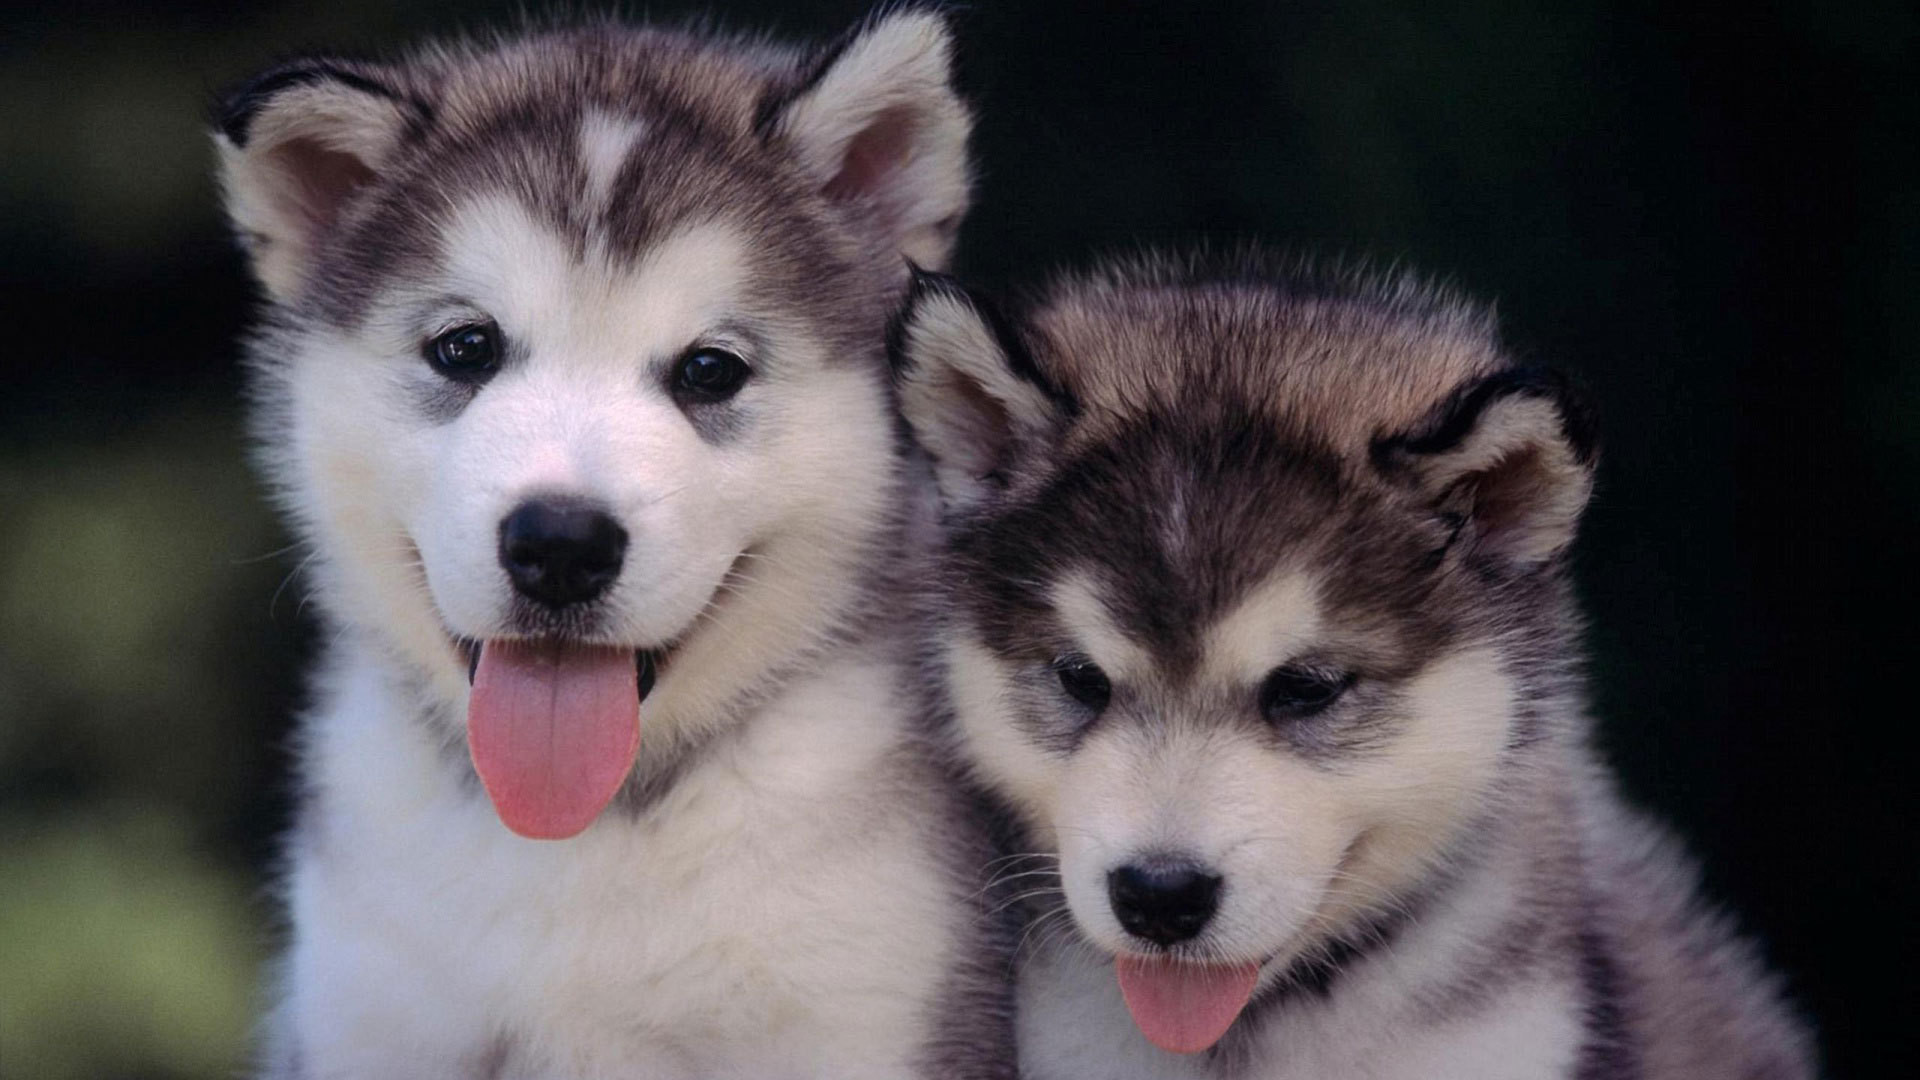 Cute Husky Puppies Wallpaper